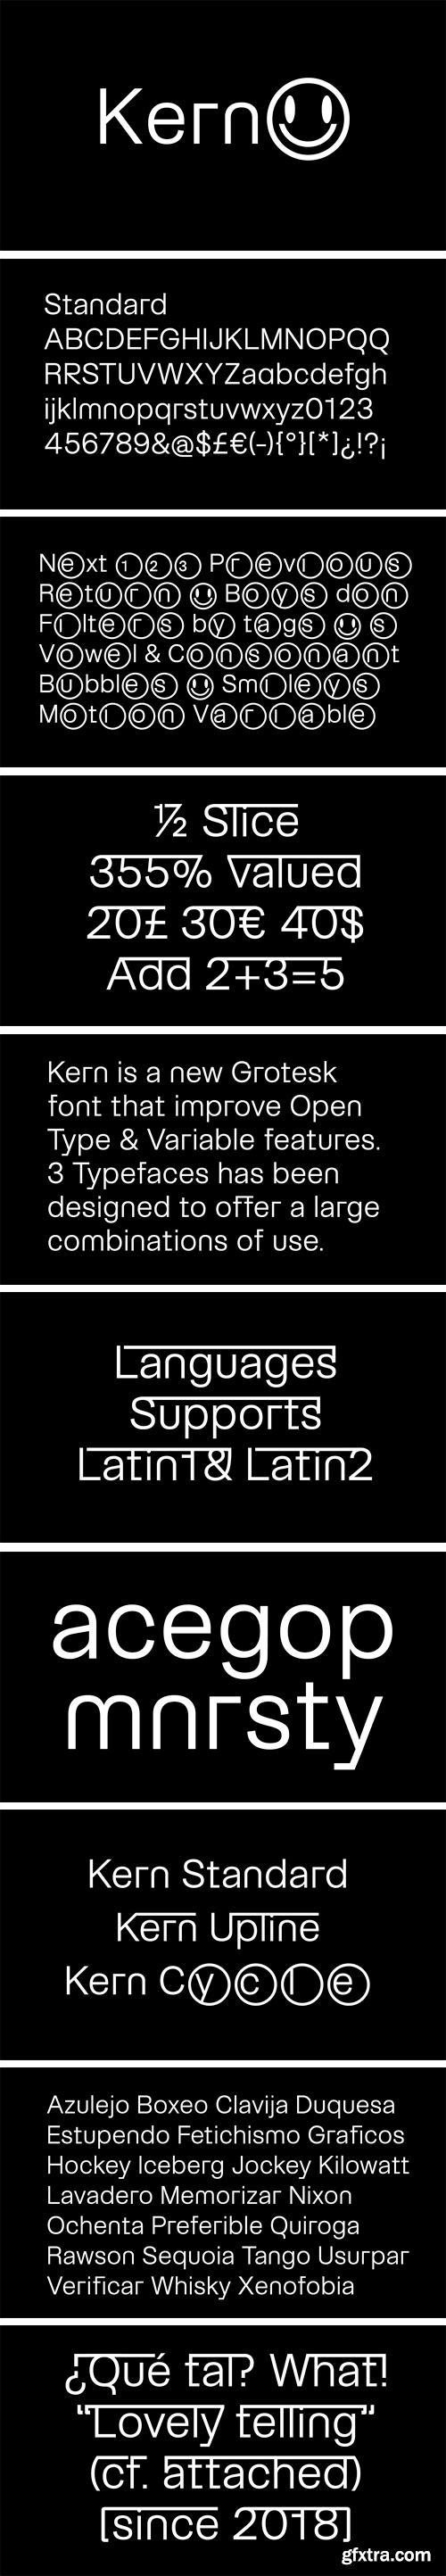 Kern Typefaces